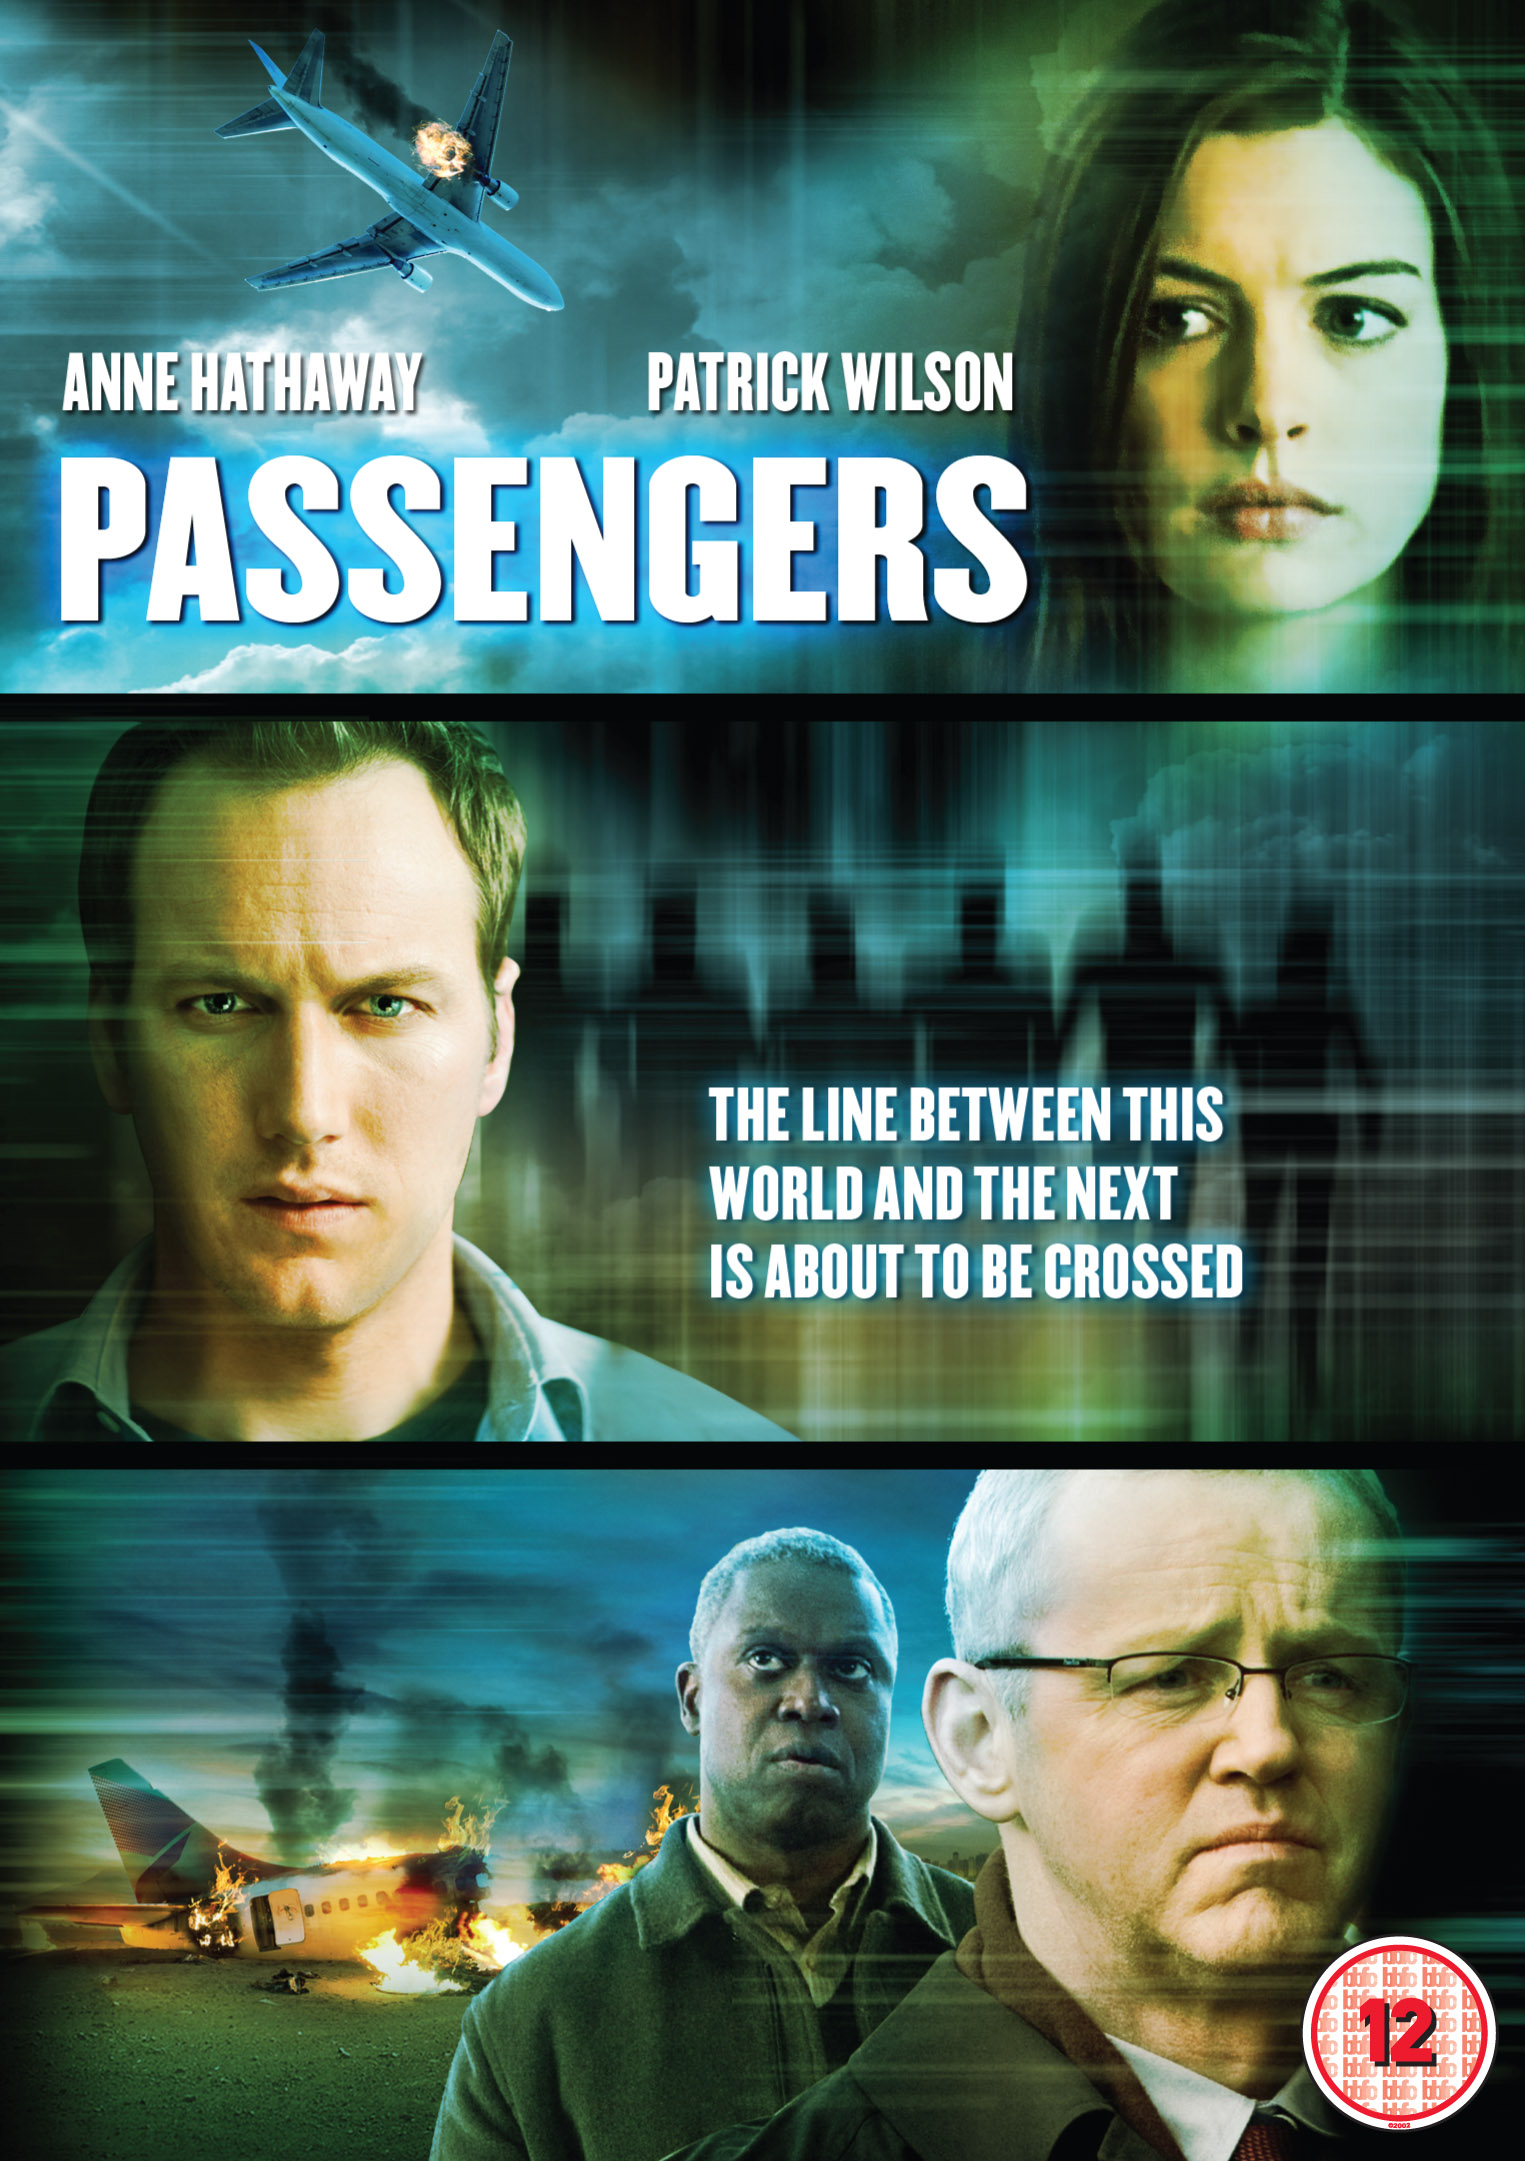 Anne Hathaway in Passengers